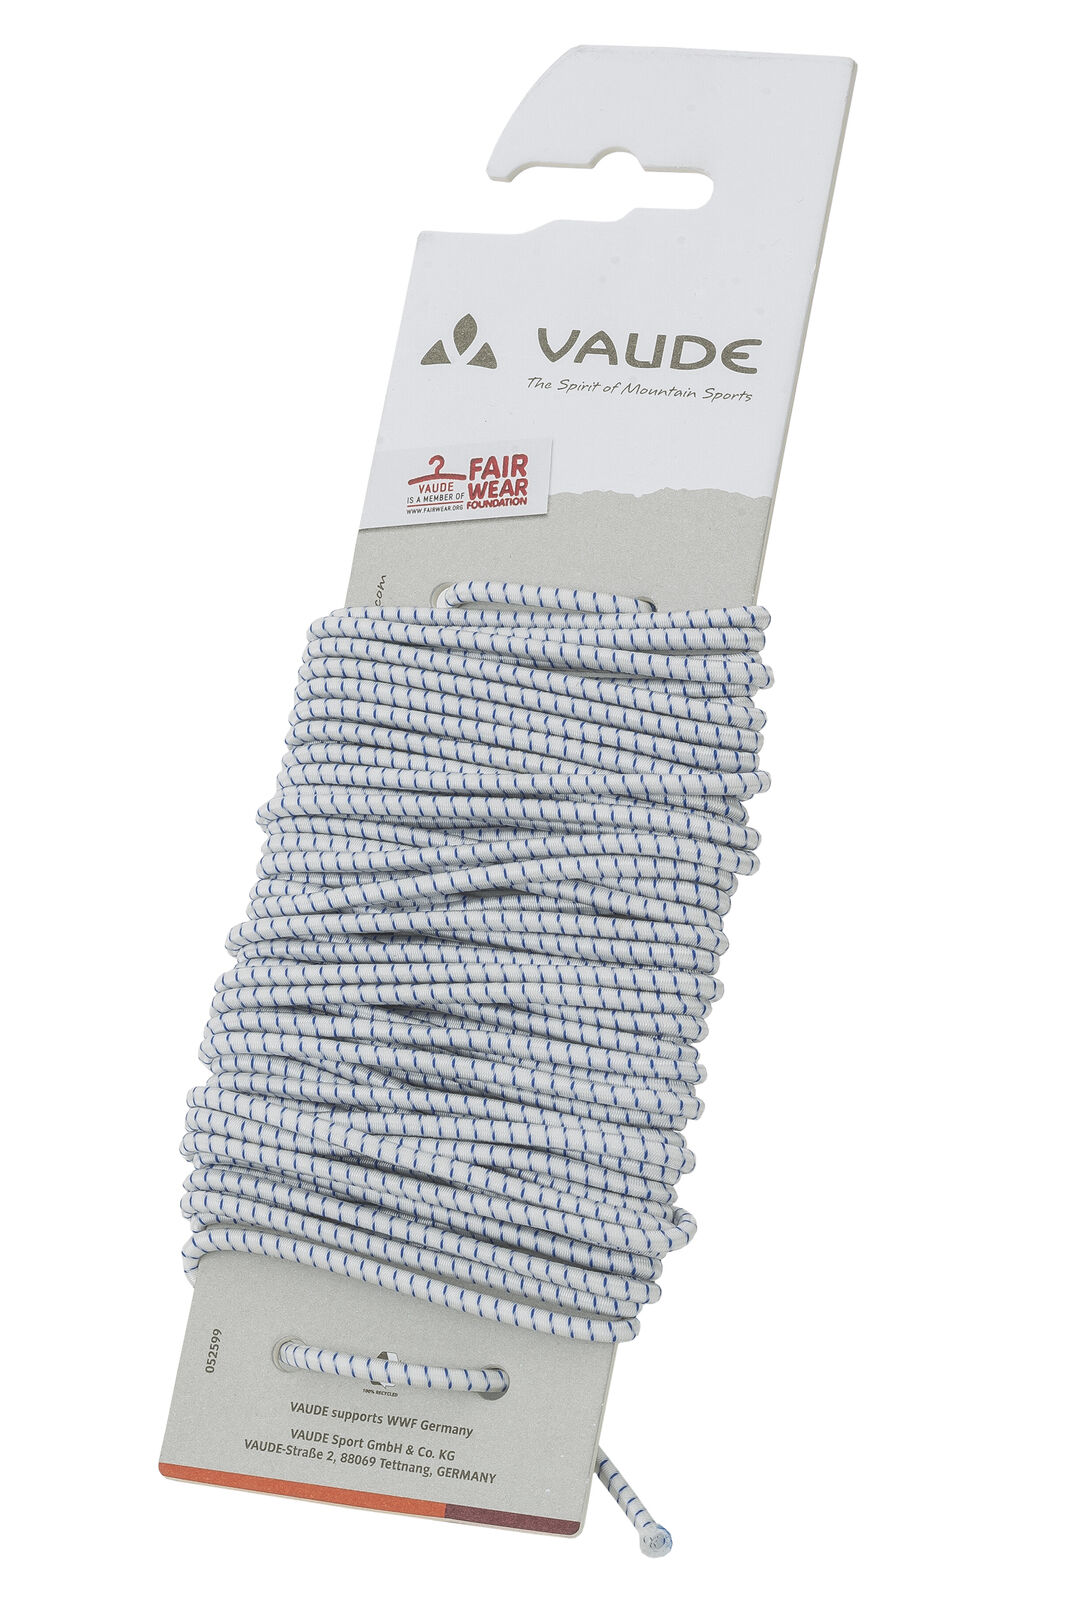 Vaude - Shock Cord (10 m) - Cord